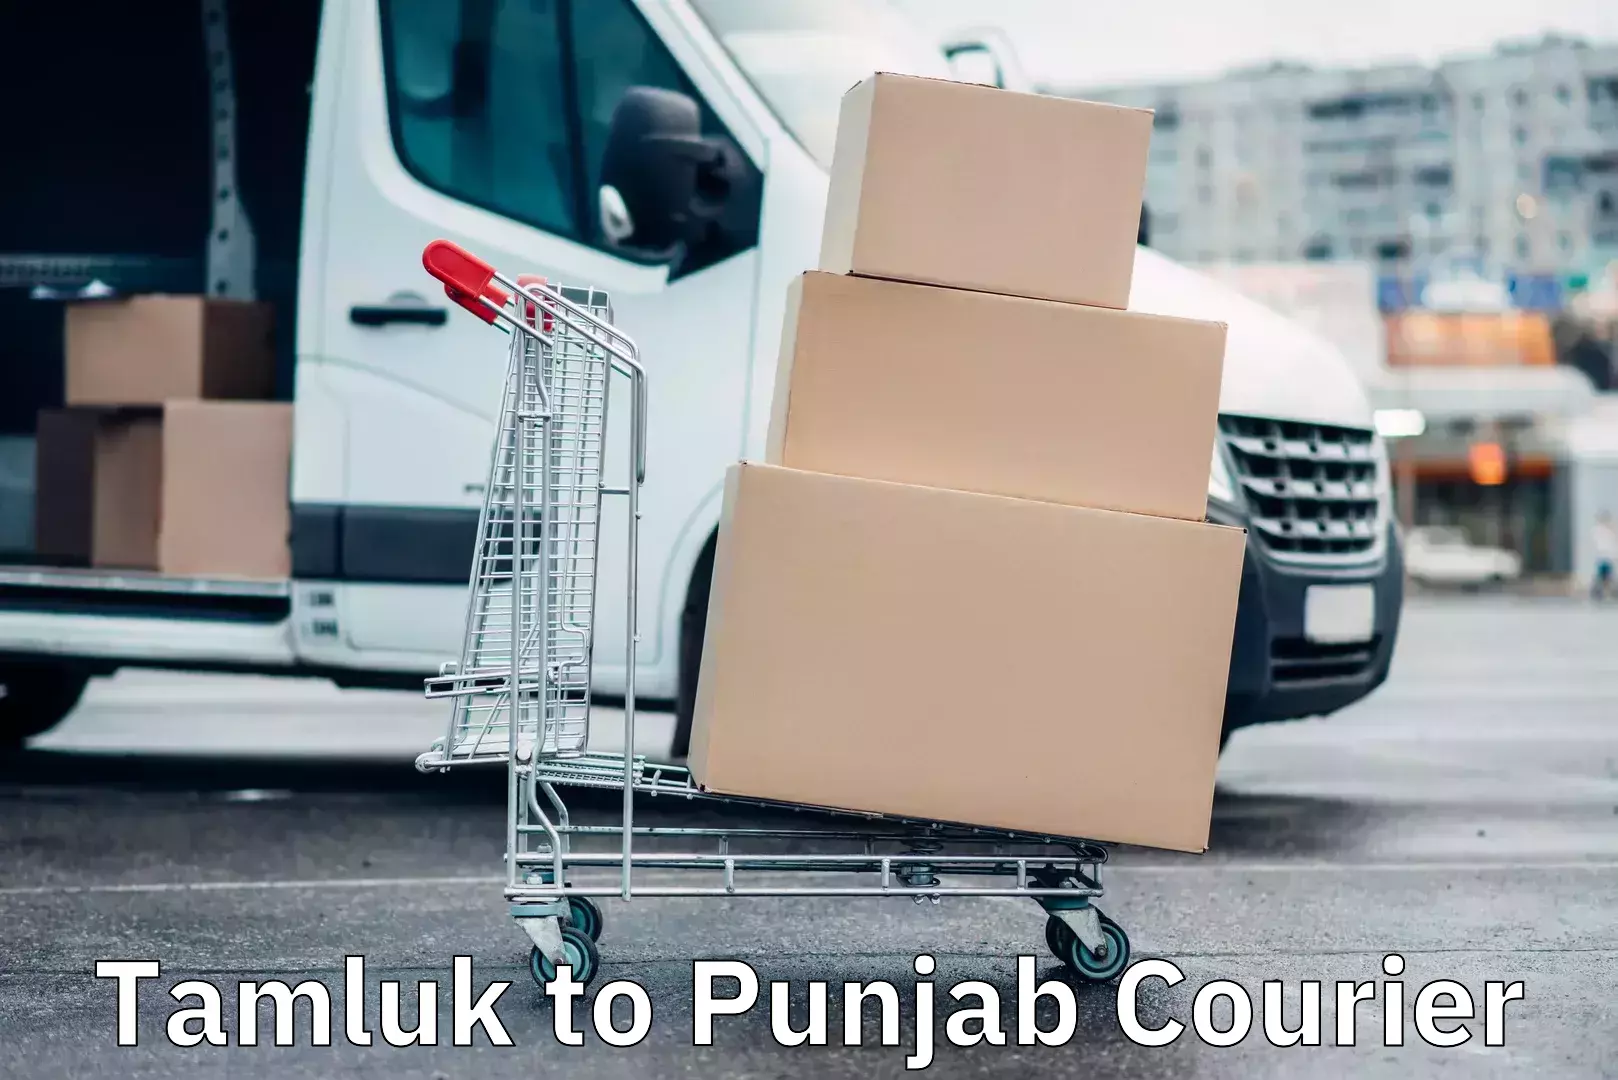 Modern delivery technologies Tamluk to Punjab